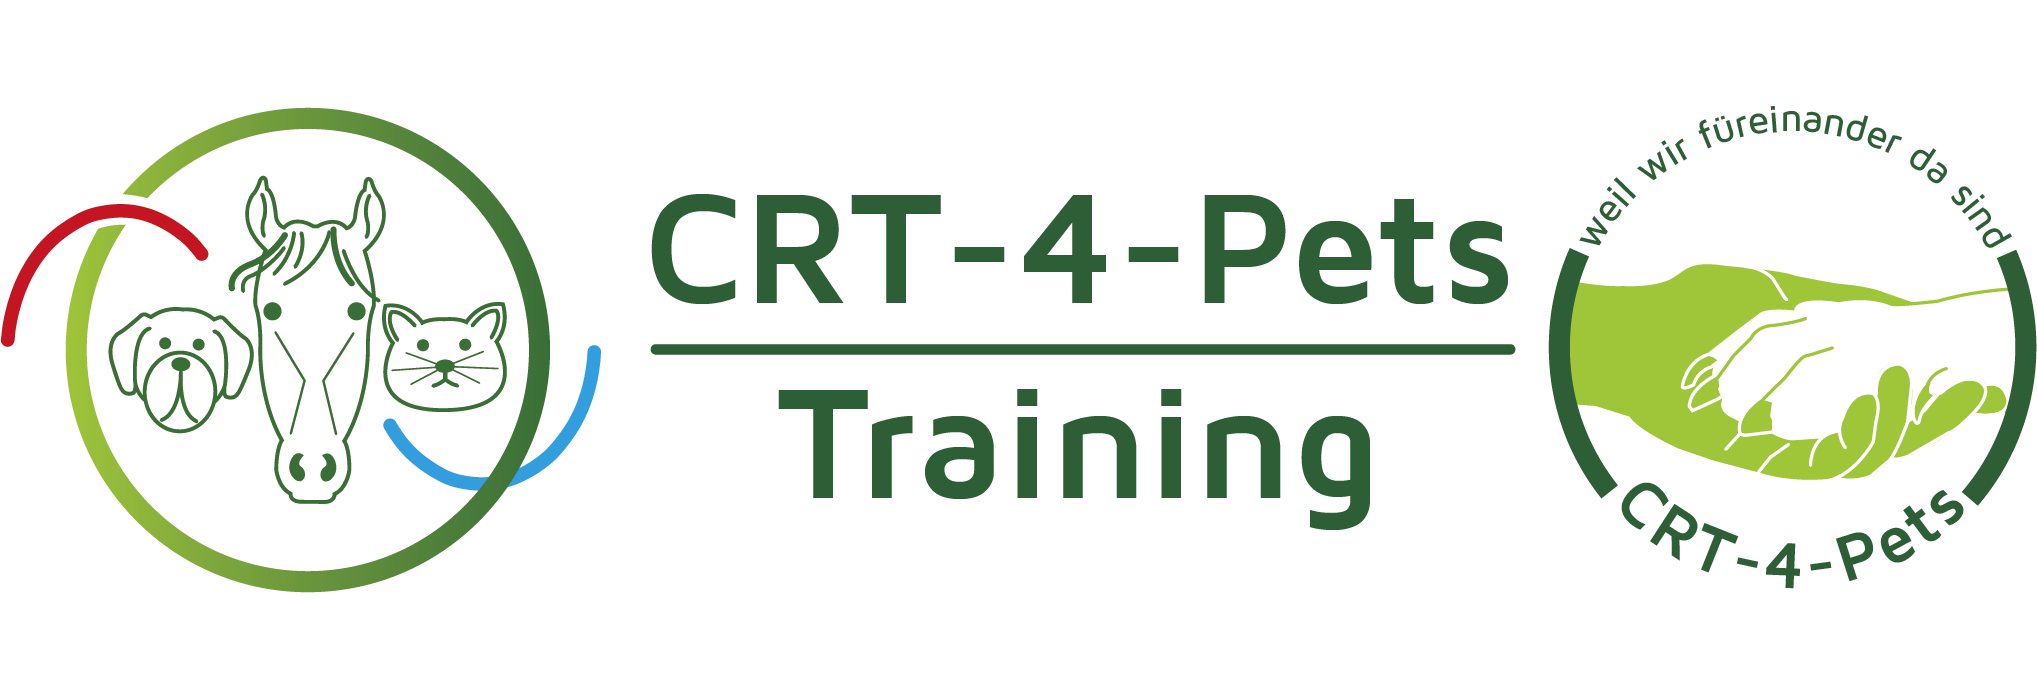 CRT-4-PETS